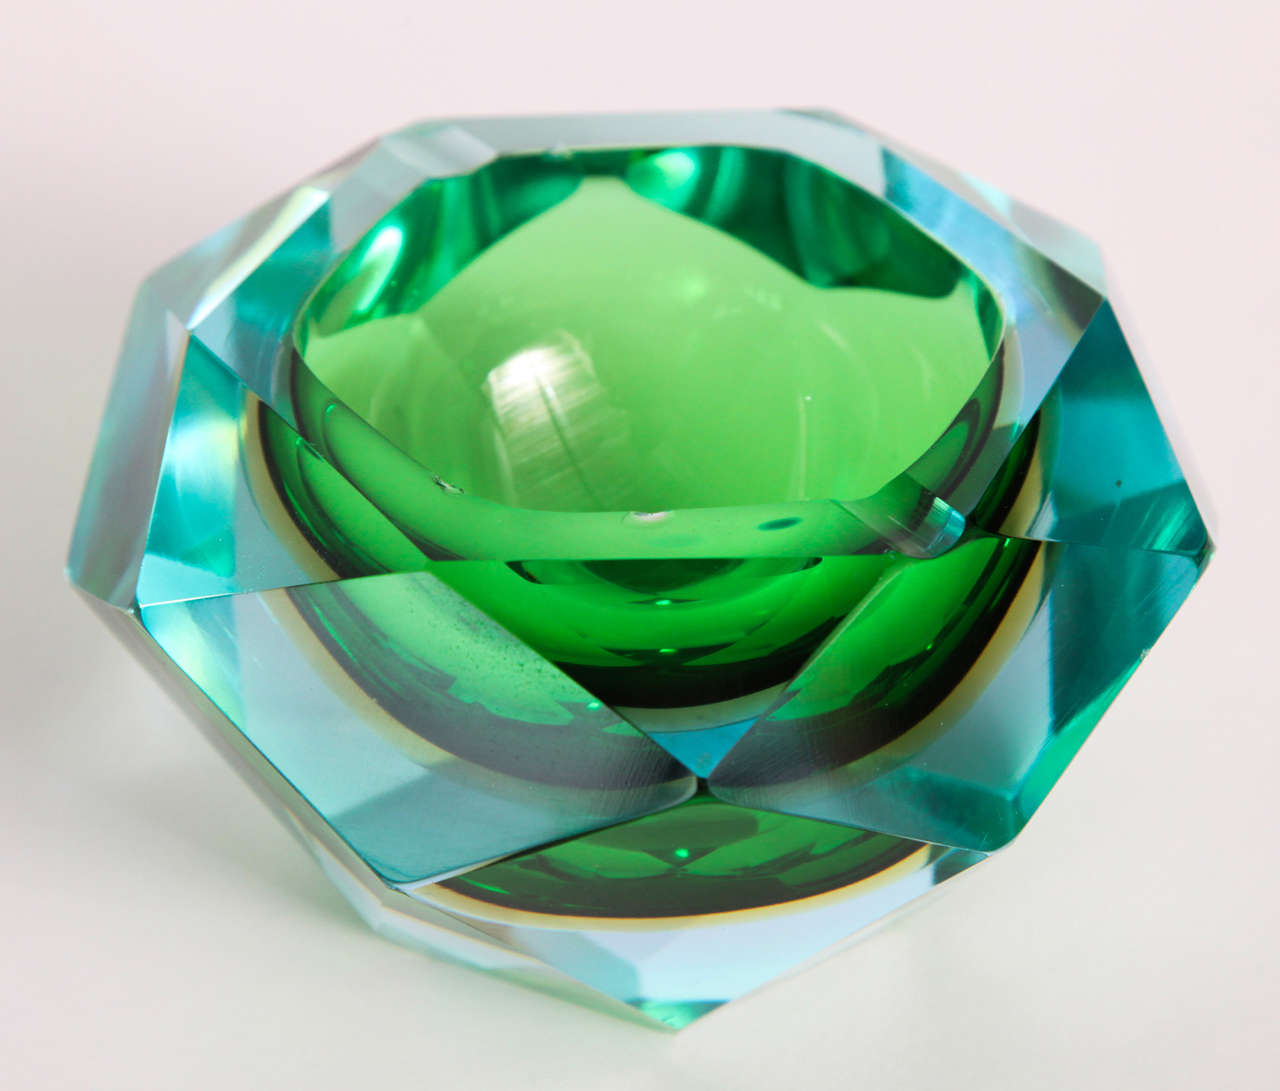 Italian Jewel-like Murano Faceted Glass Ashtray For Sale